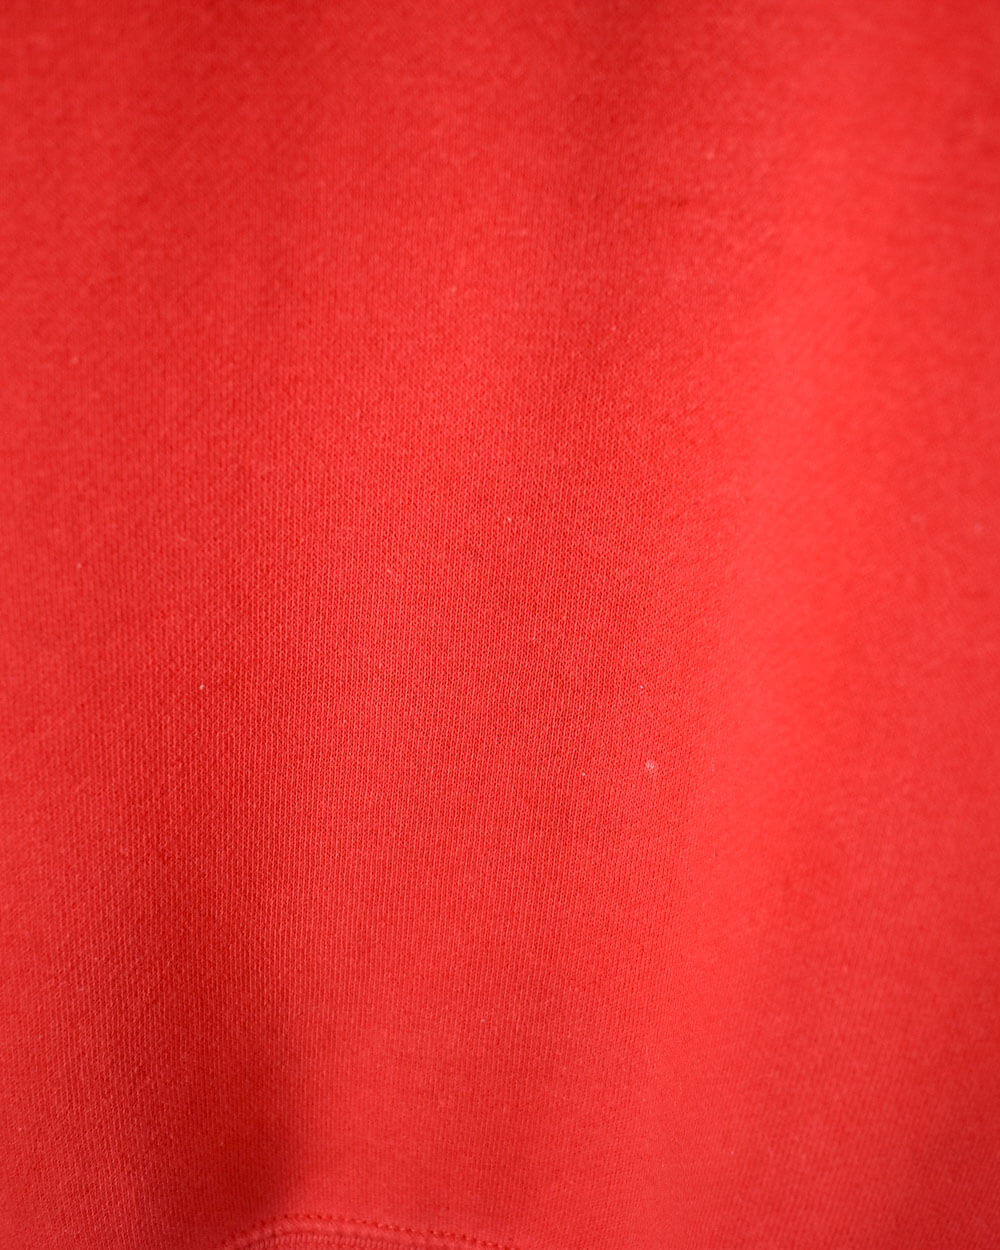 Red Reebok Hockey Calgary Flames Sweatshirt - Small